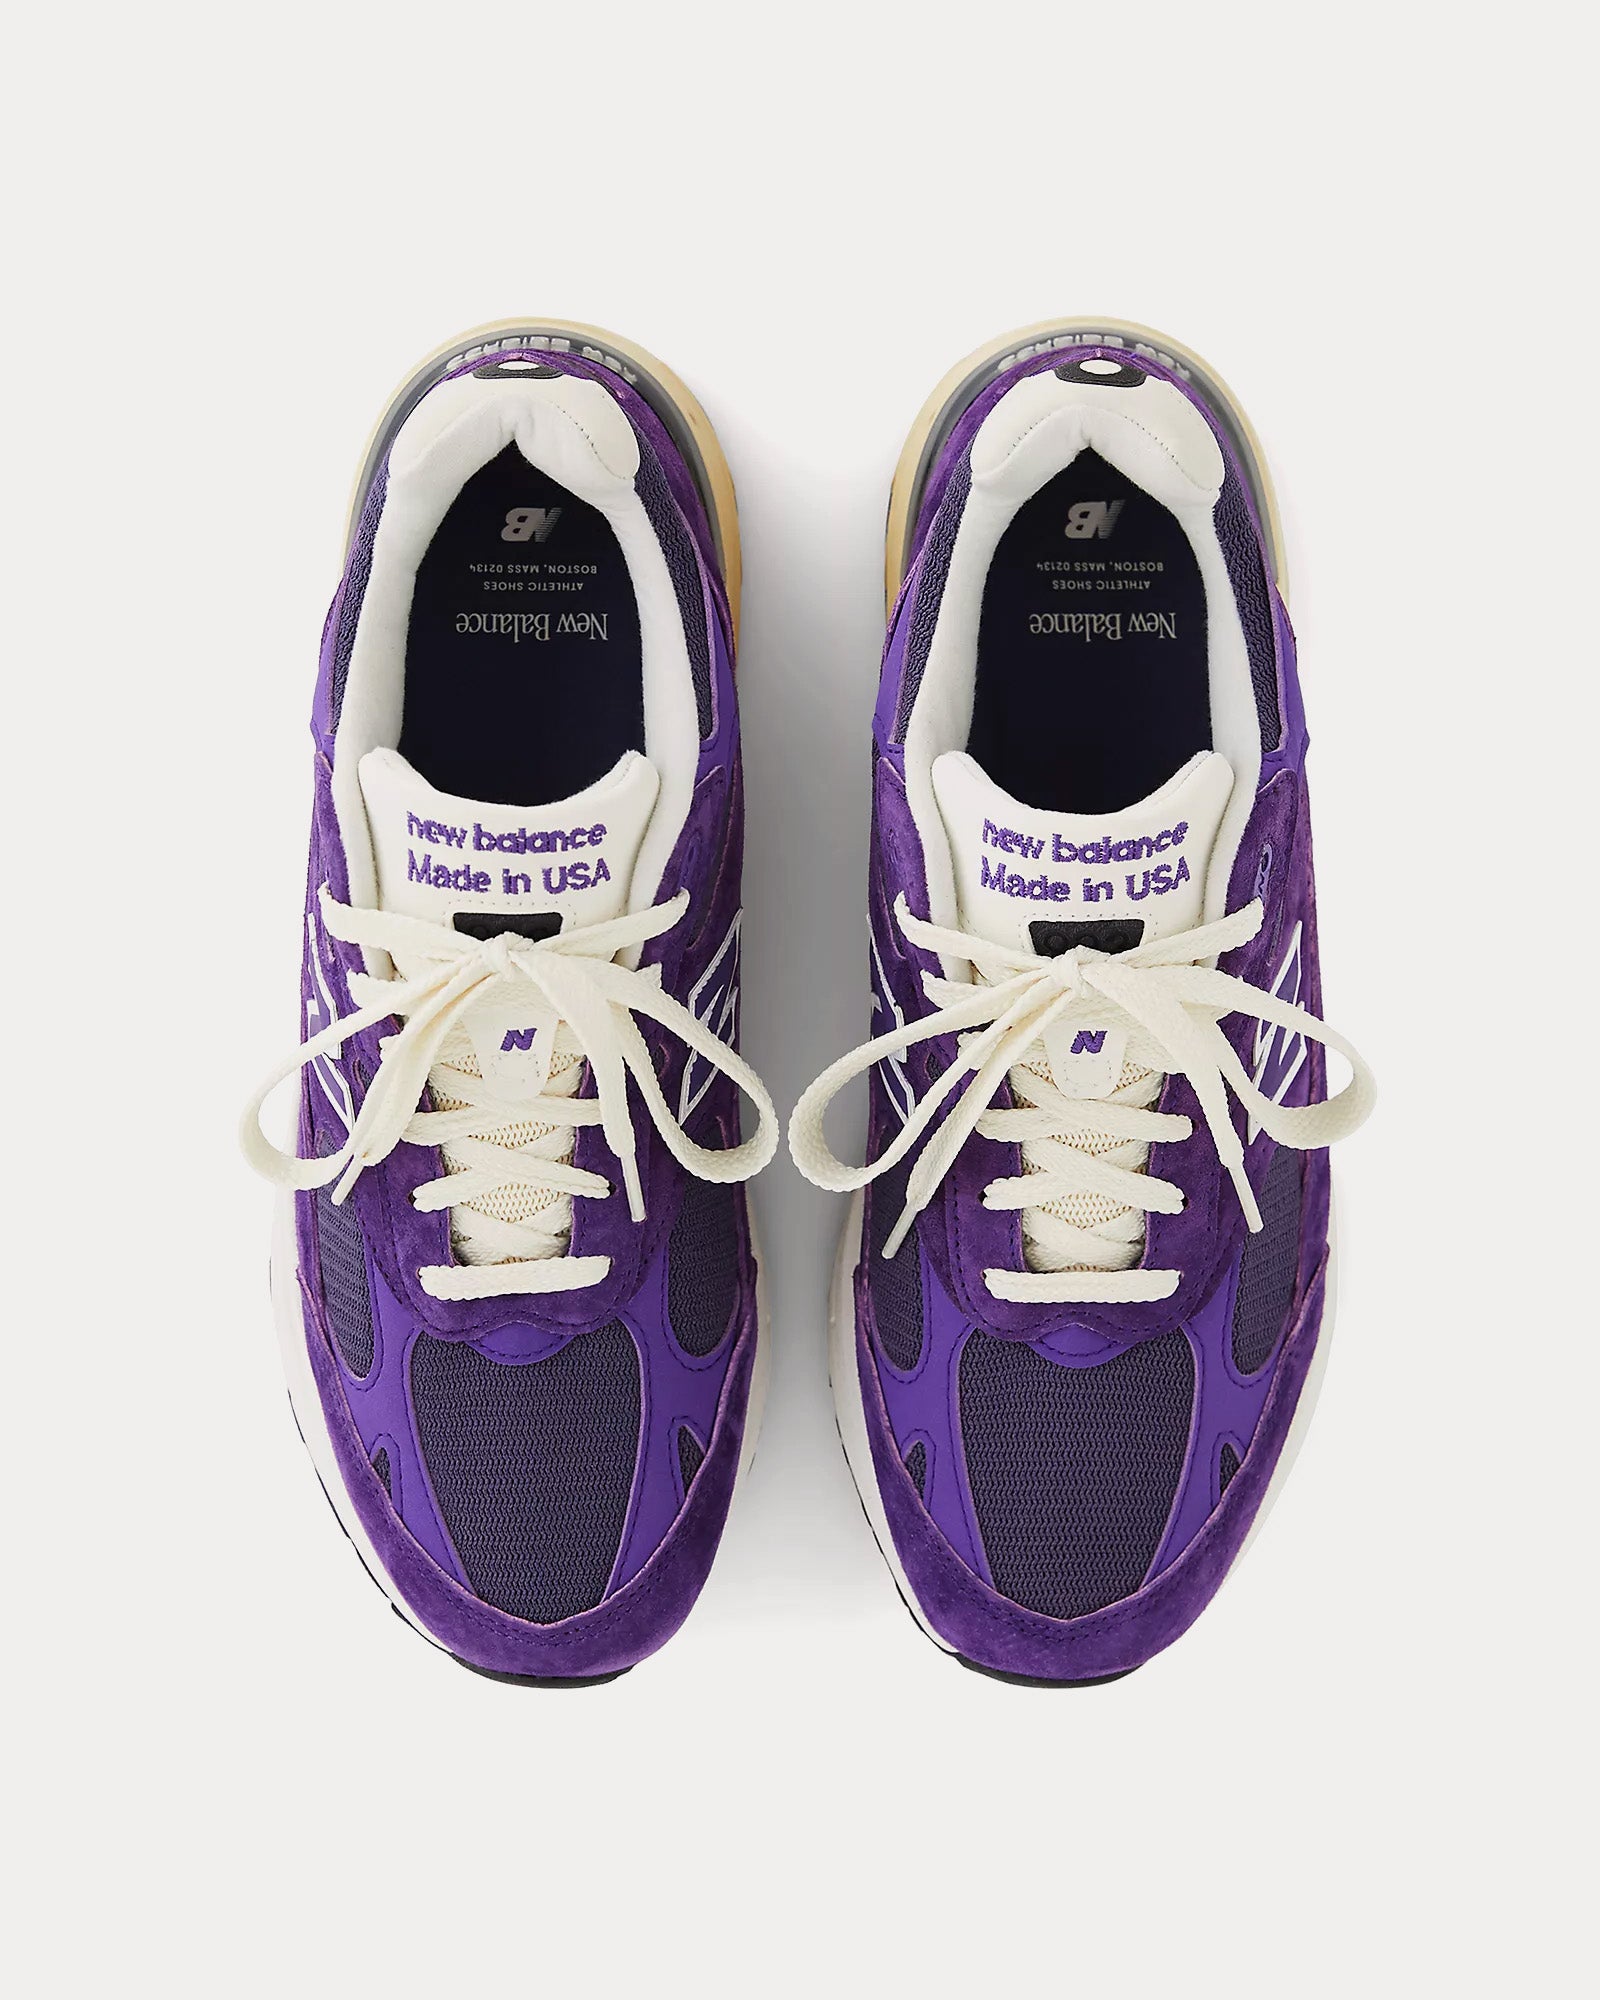 New Balance - Made in USA 993 Purple / Dark Mercury Low Top Sneakers